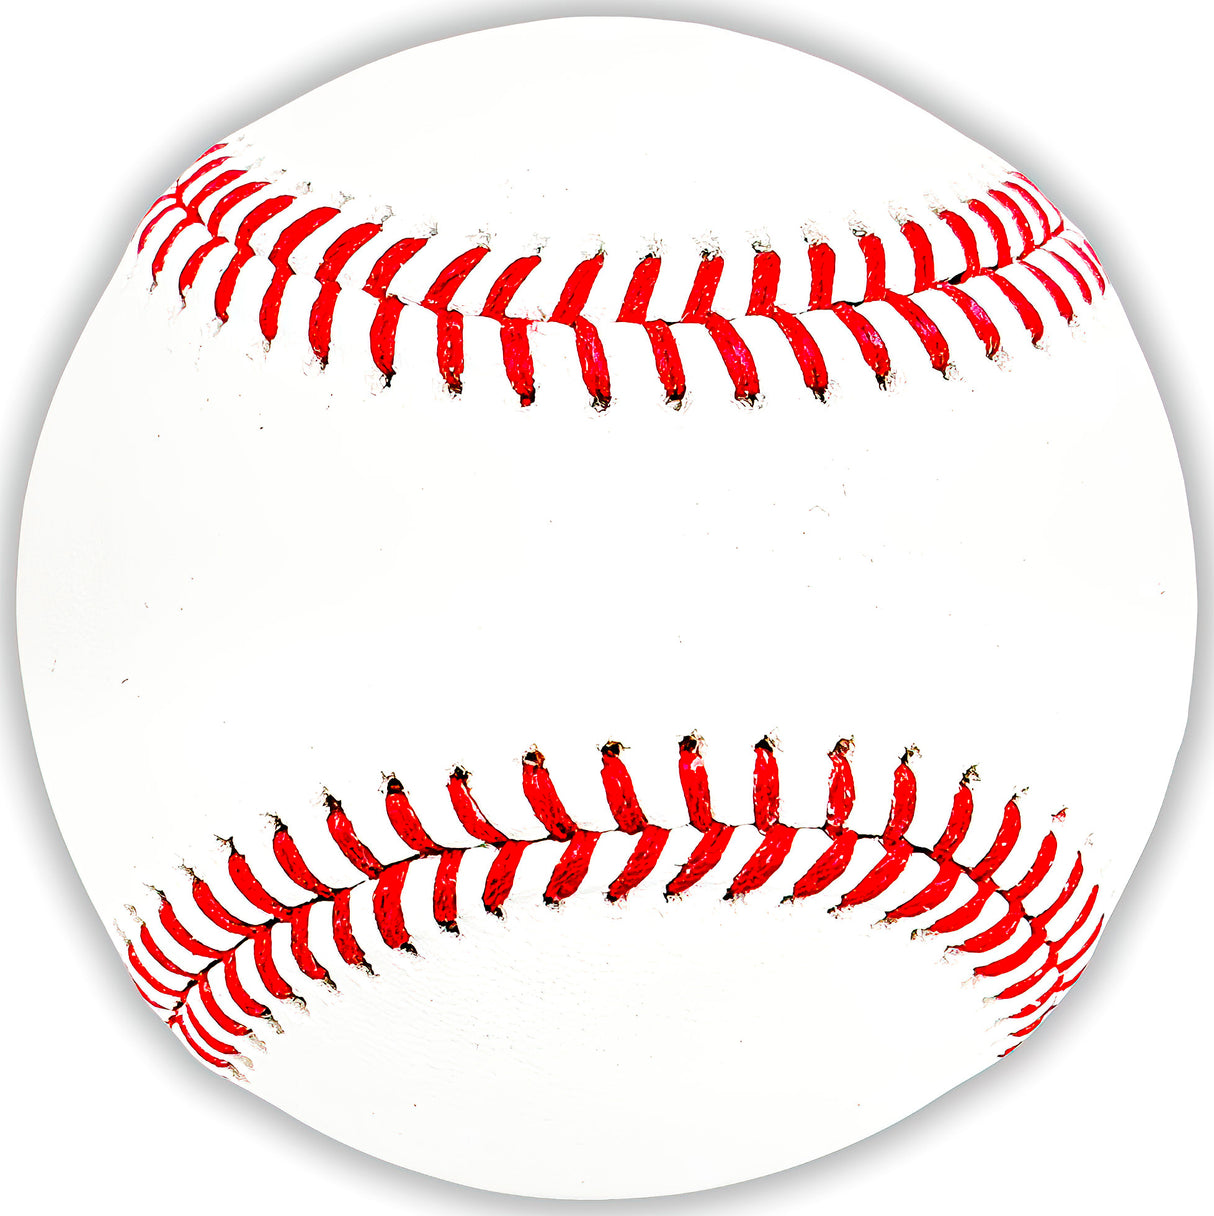 Mookie Betts Autographed Official 2020 World Series Logo MLB Baseball Los Angeles Dodgers Beckett BAS QR Stock #218698